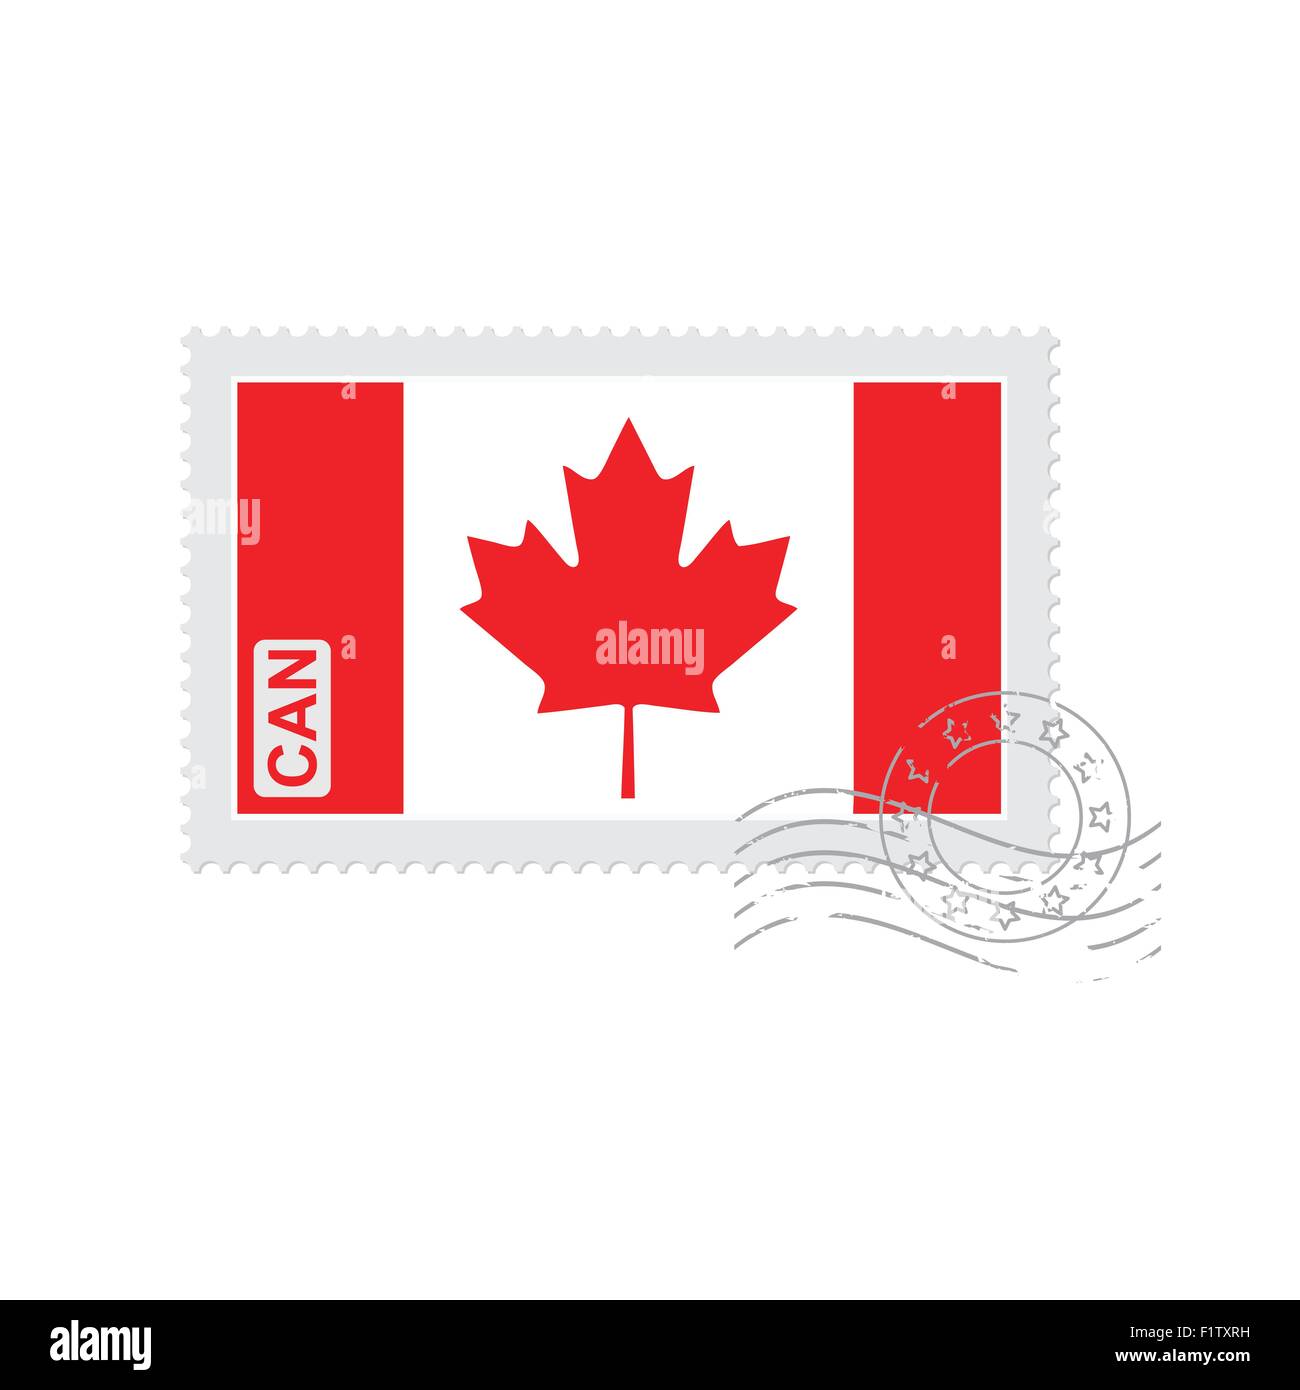 Canada 1998 Flag 46c Used Stamp c. on eBid Italy